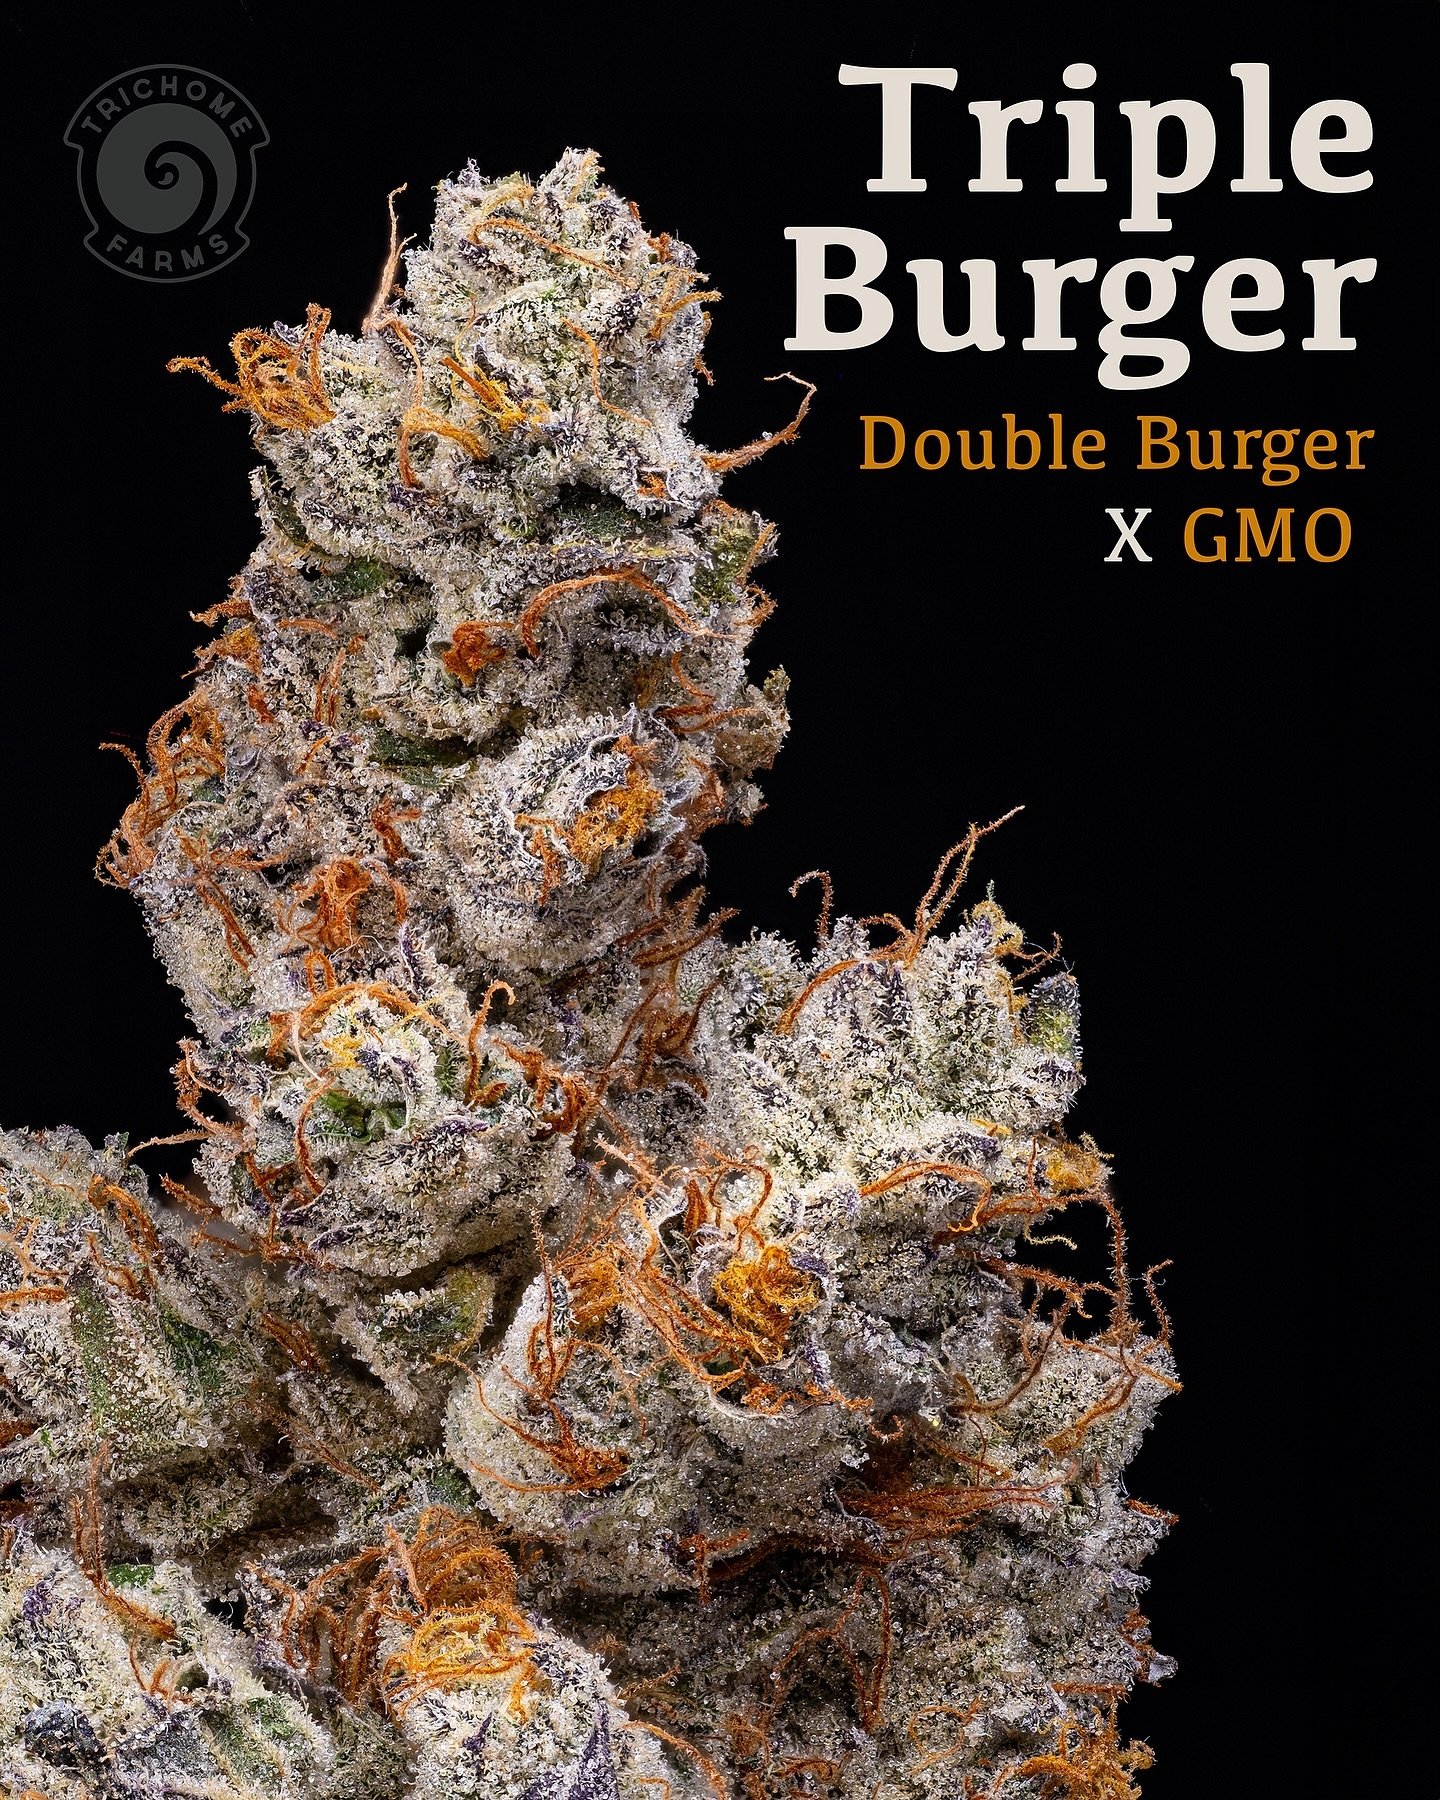 TRIPLE BURGER: Double Burger X GMO
⛽️